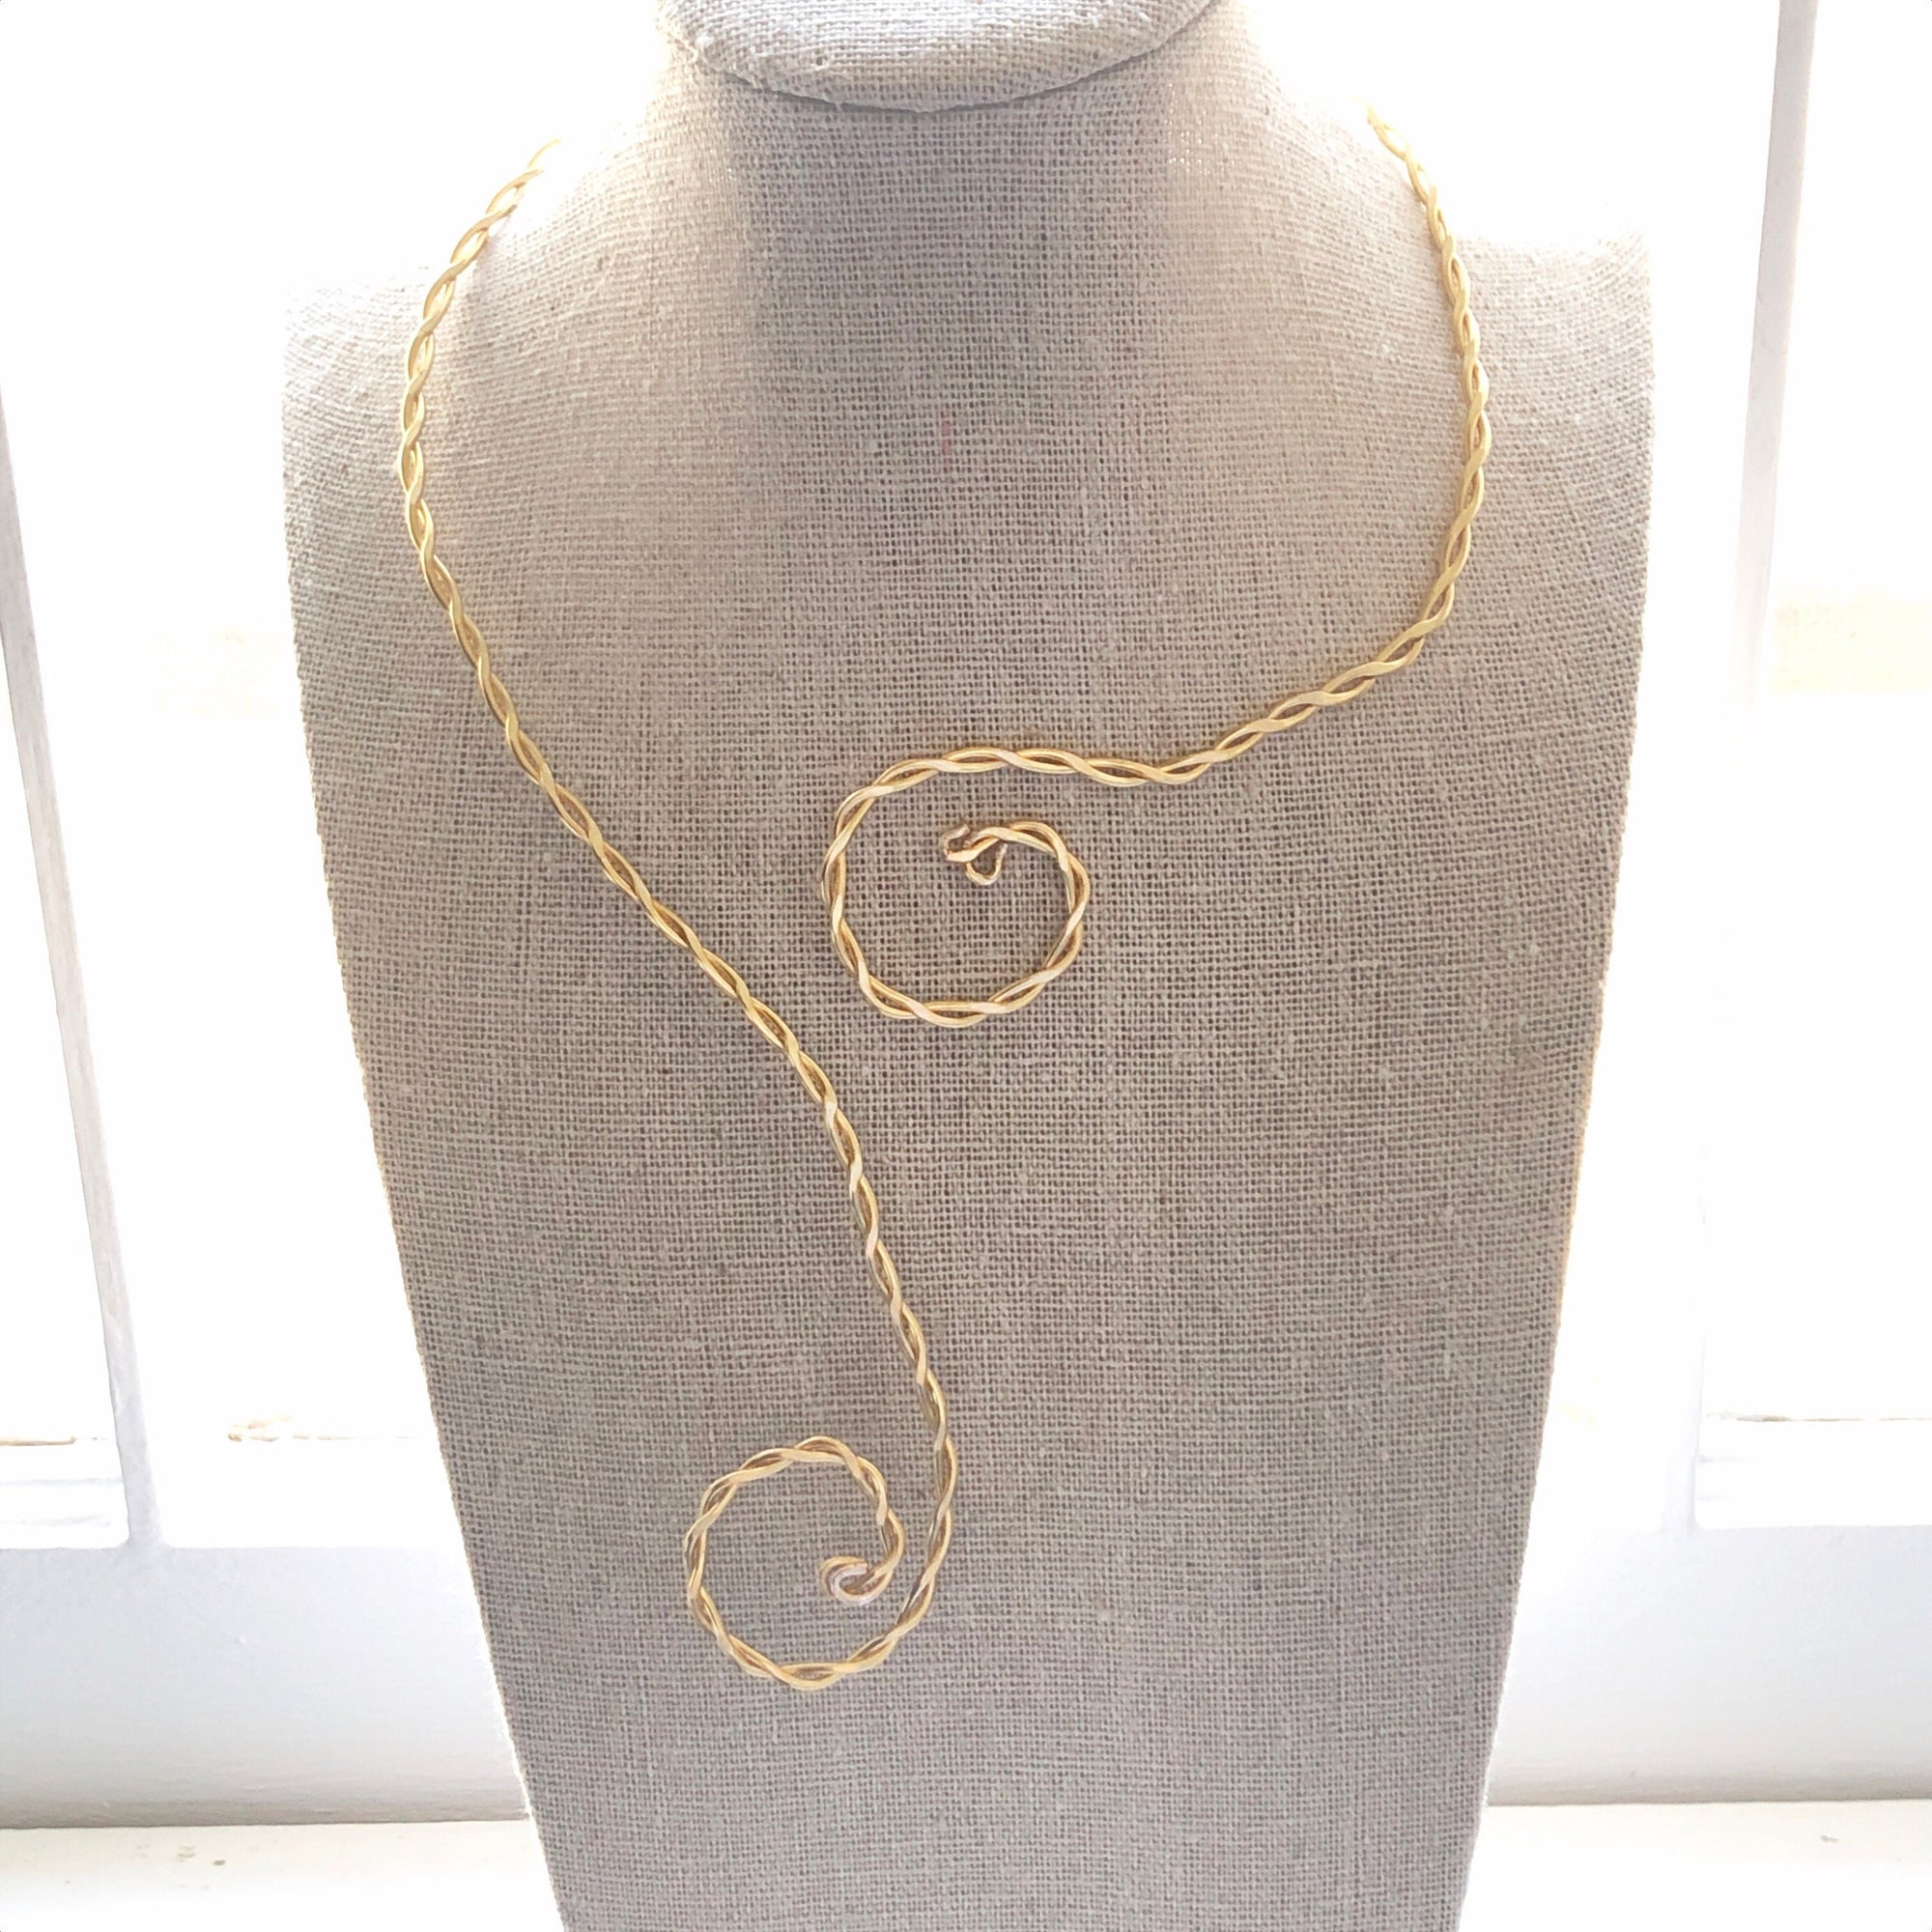 Open collar necklace, Metal choker Gold collar choker for women, Cuff necklace open choker, Norse jewelry celtic necklace